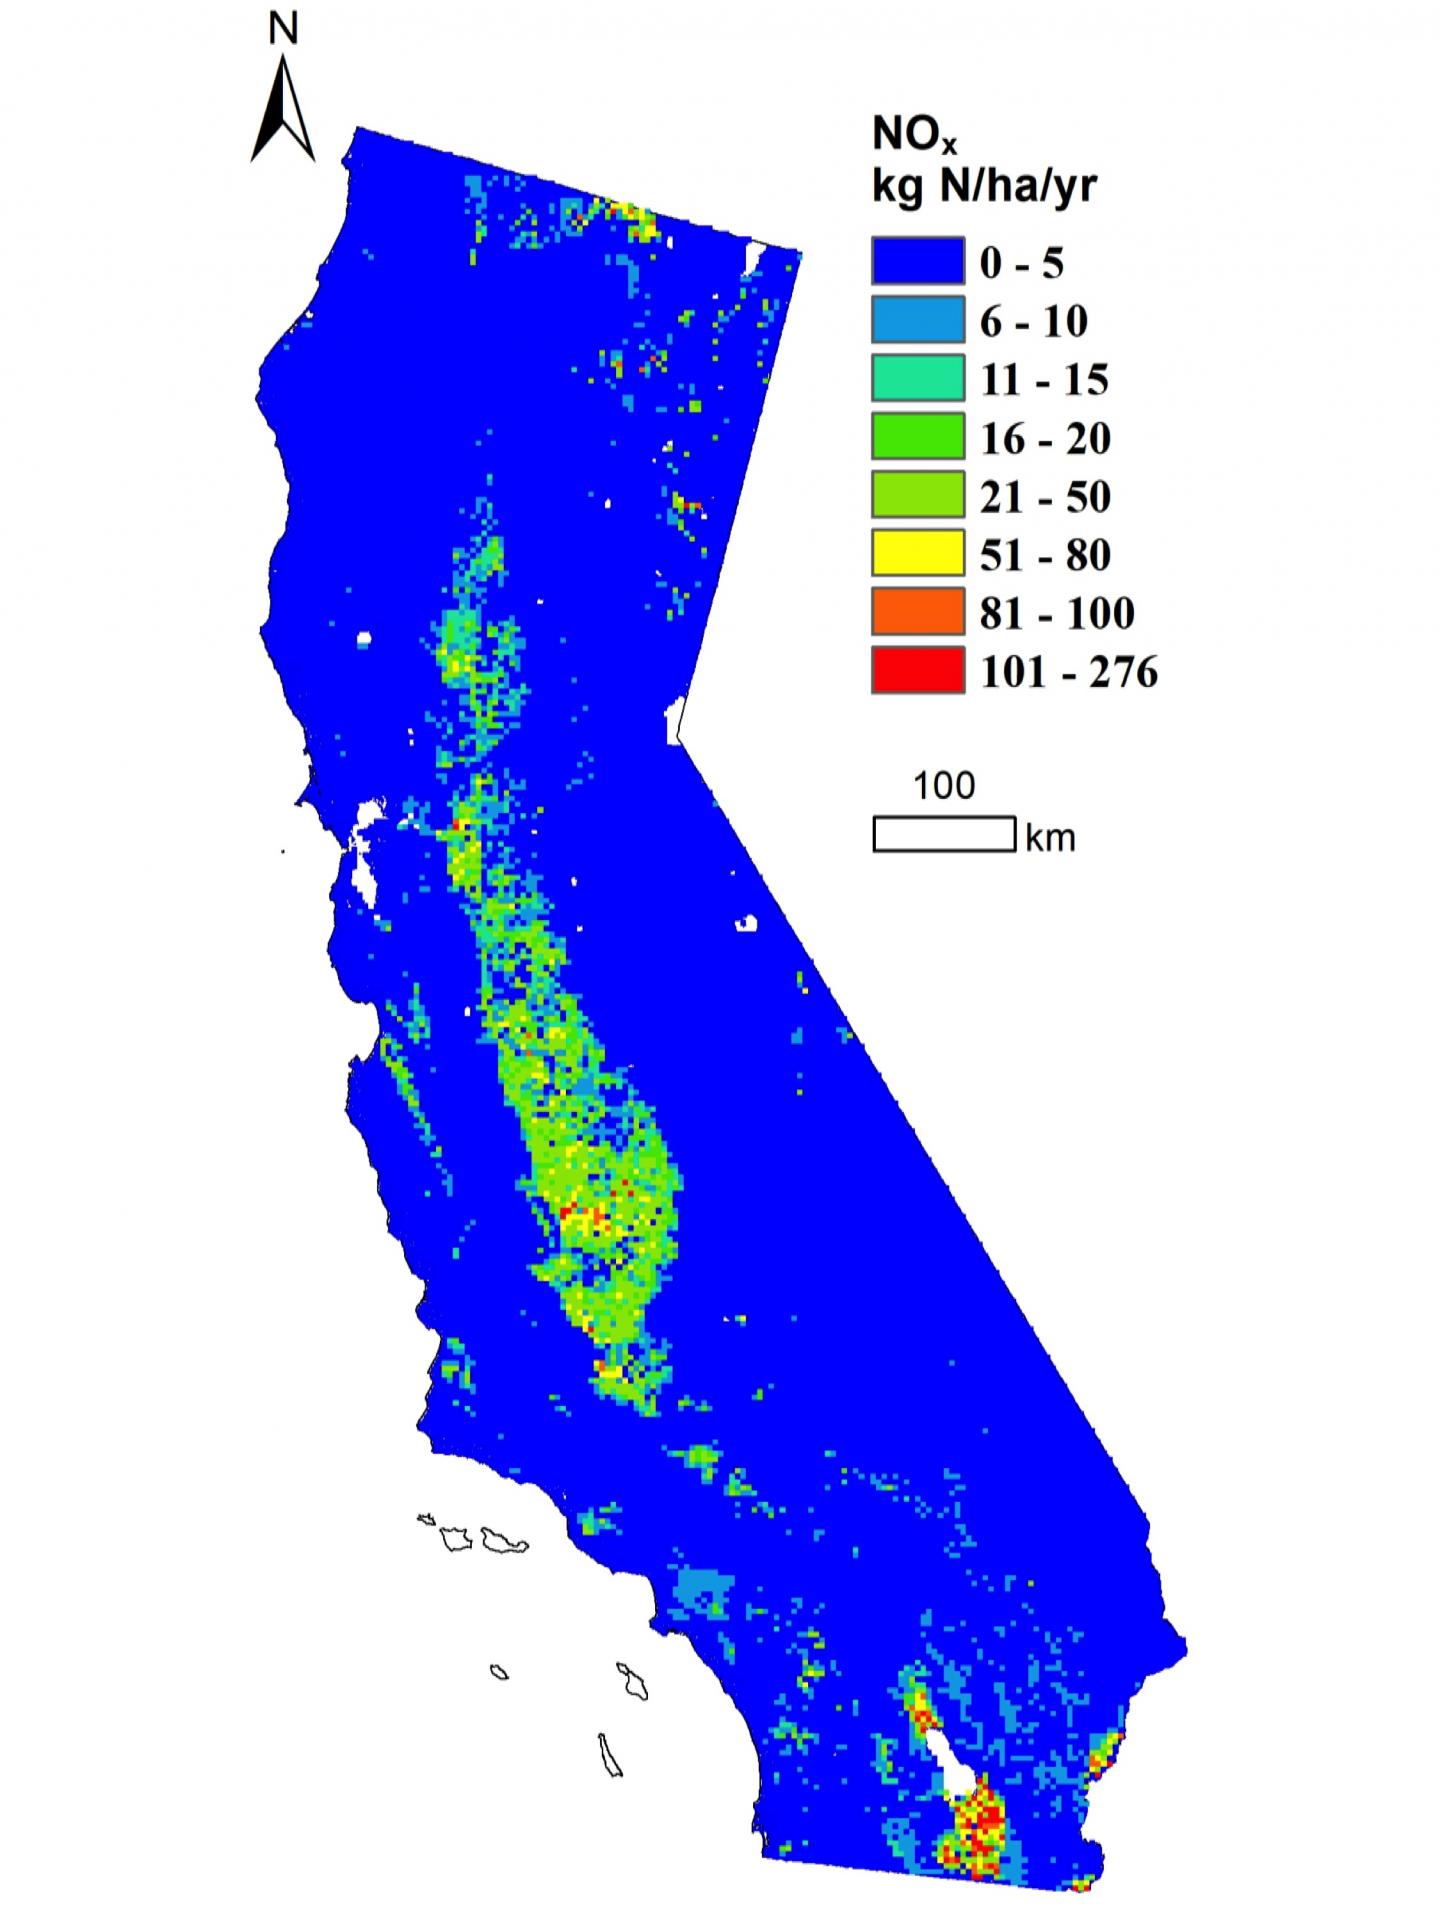 NOx Emissions Map of California